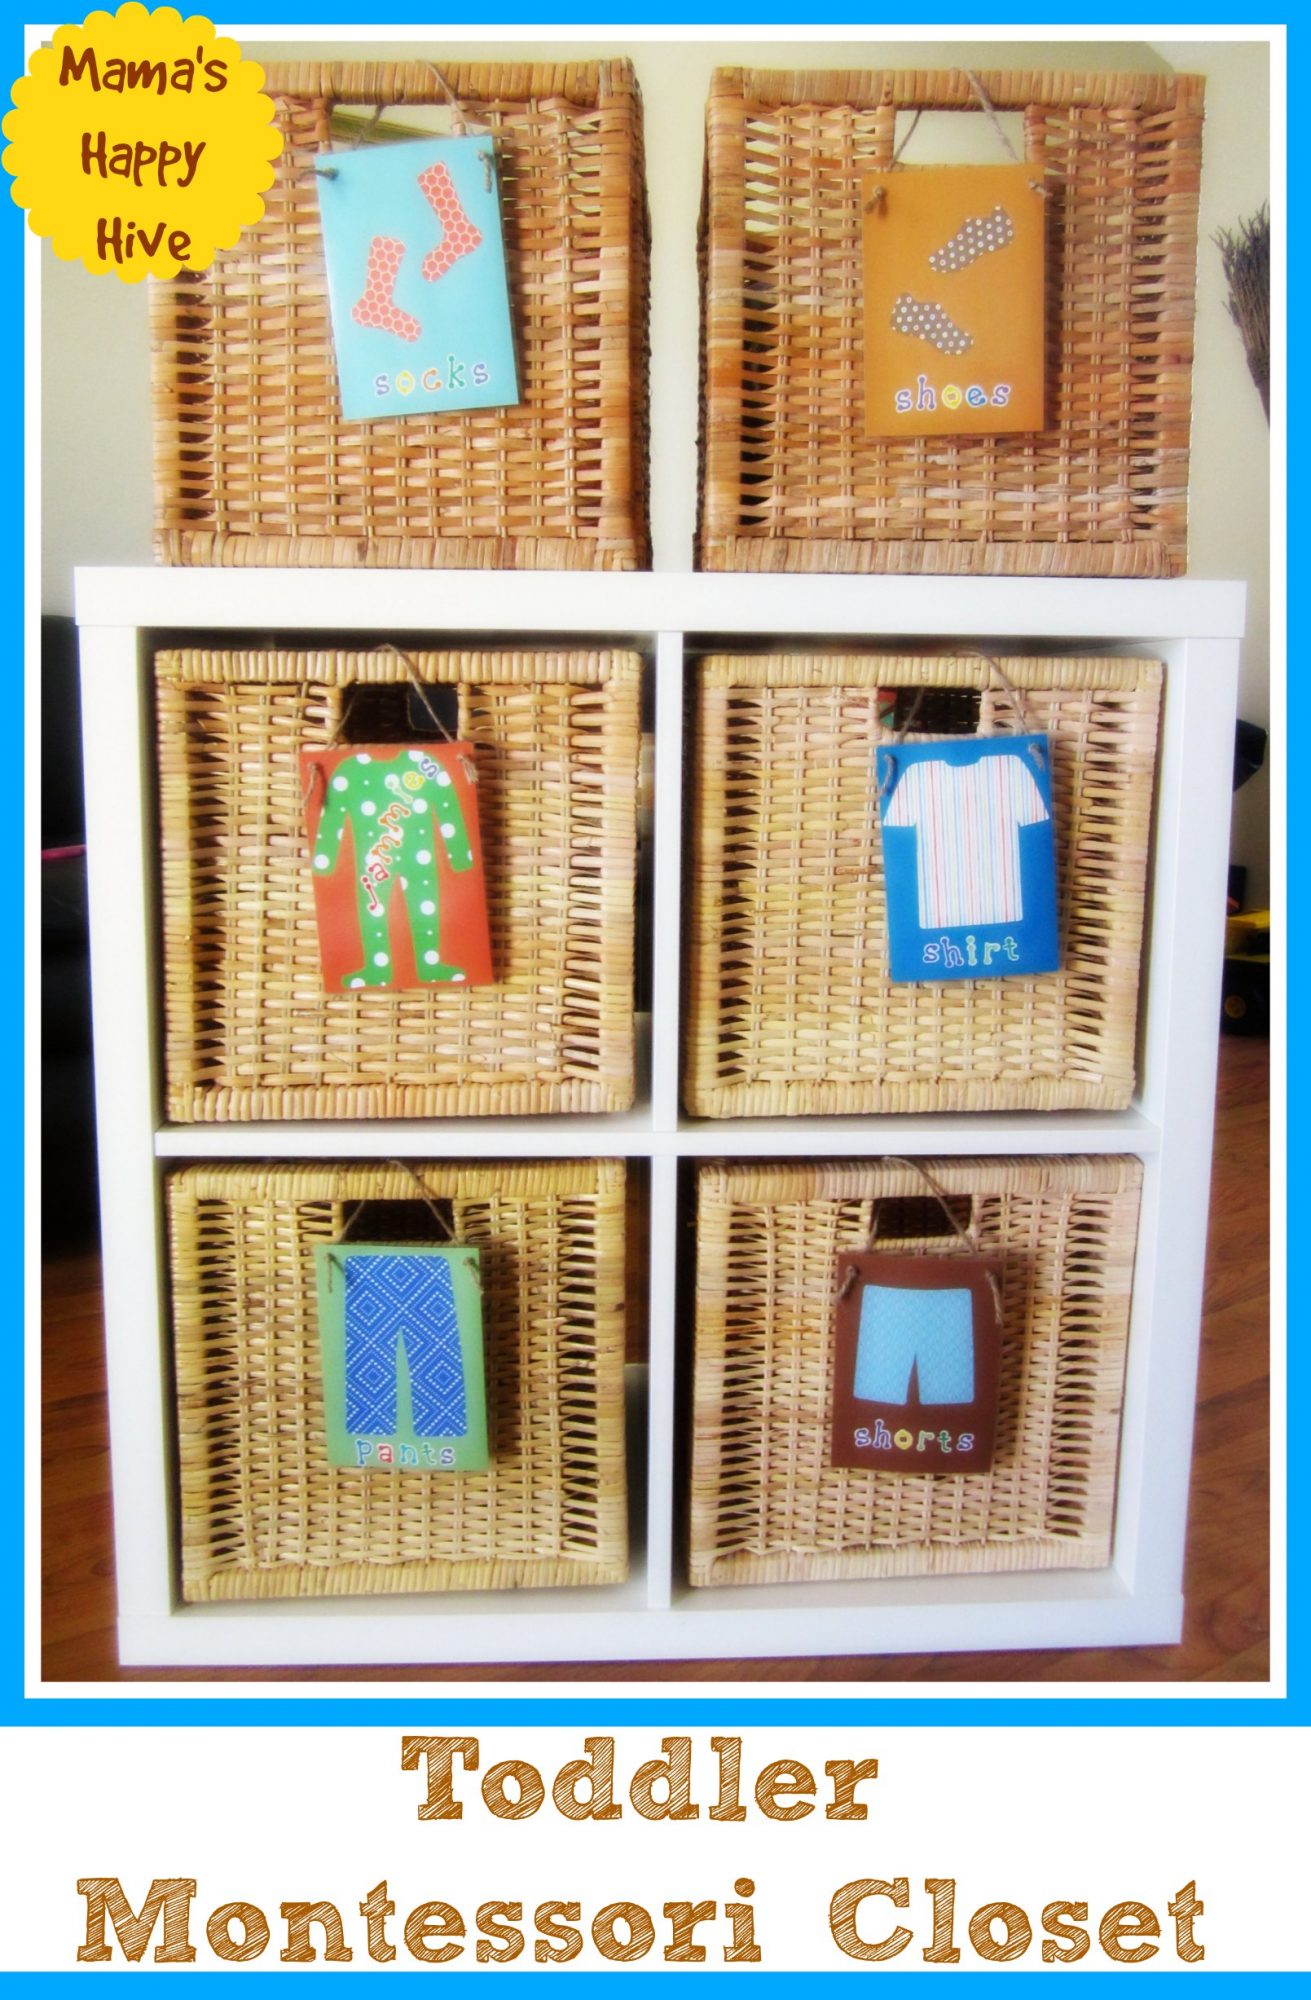 Toddler Montessori Closet - www.mamashappyhive.com